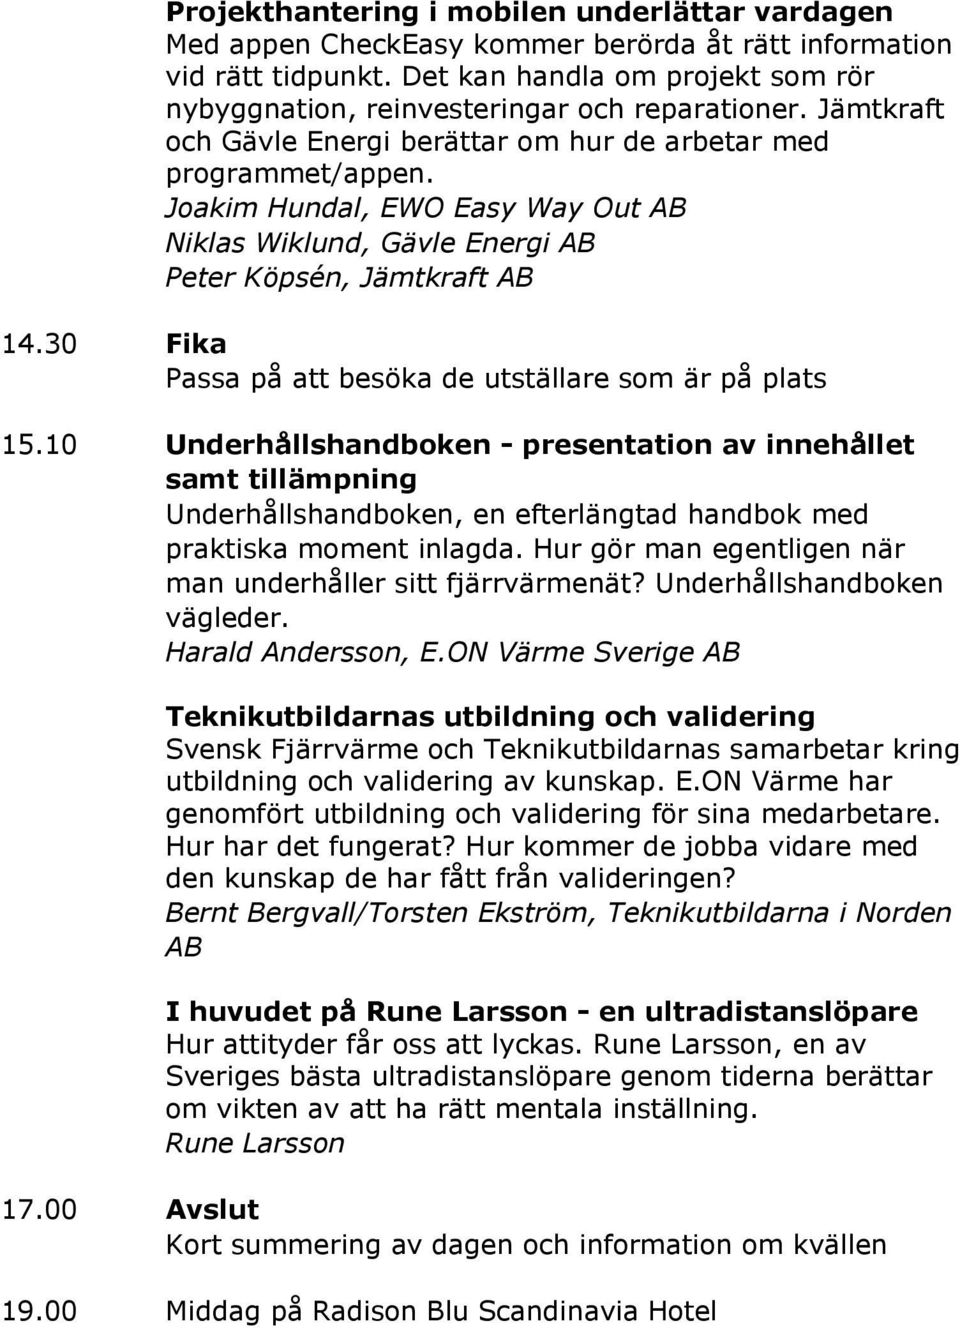 Joakim Hundal, EWO Easy Way Out AB Niklas Wiklund, Gävle Energi AB Peter Köpsén, Jämtkraft AB 14.30 Fika 15.